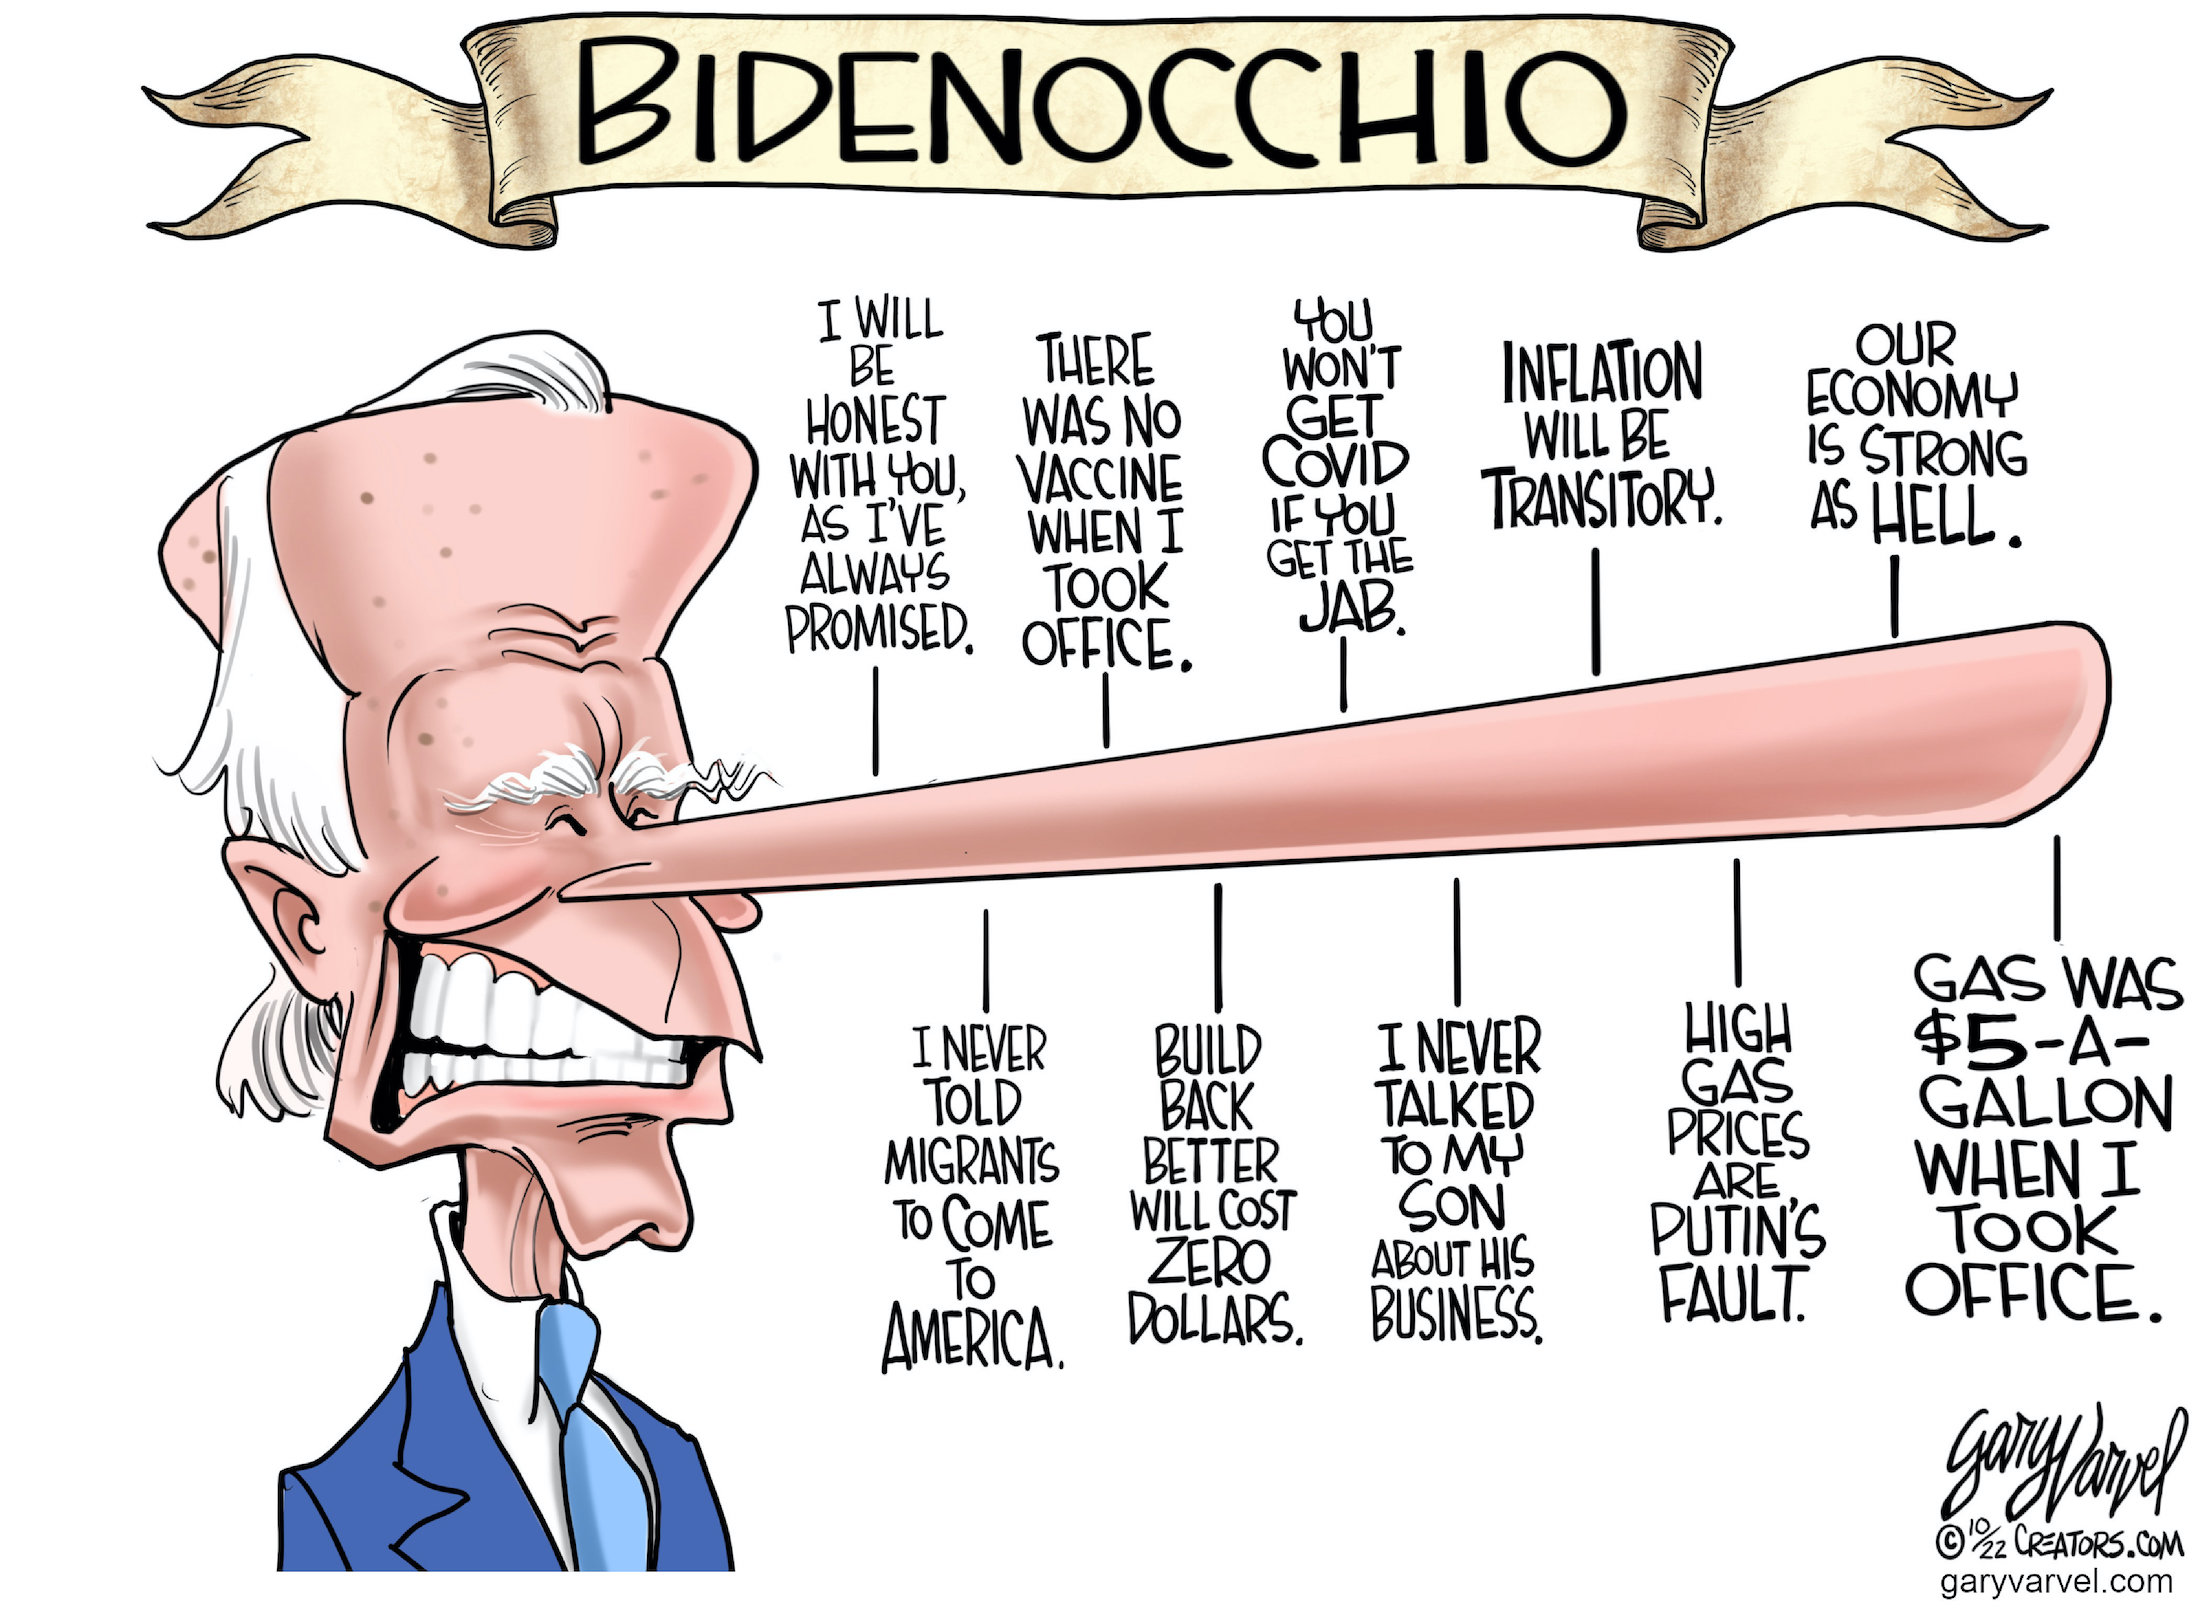 Political Cartoons - Tooning into Sleepy Joe Biden - Bidenocchio - Washington Times